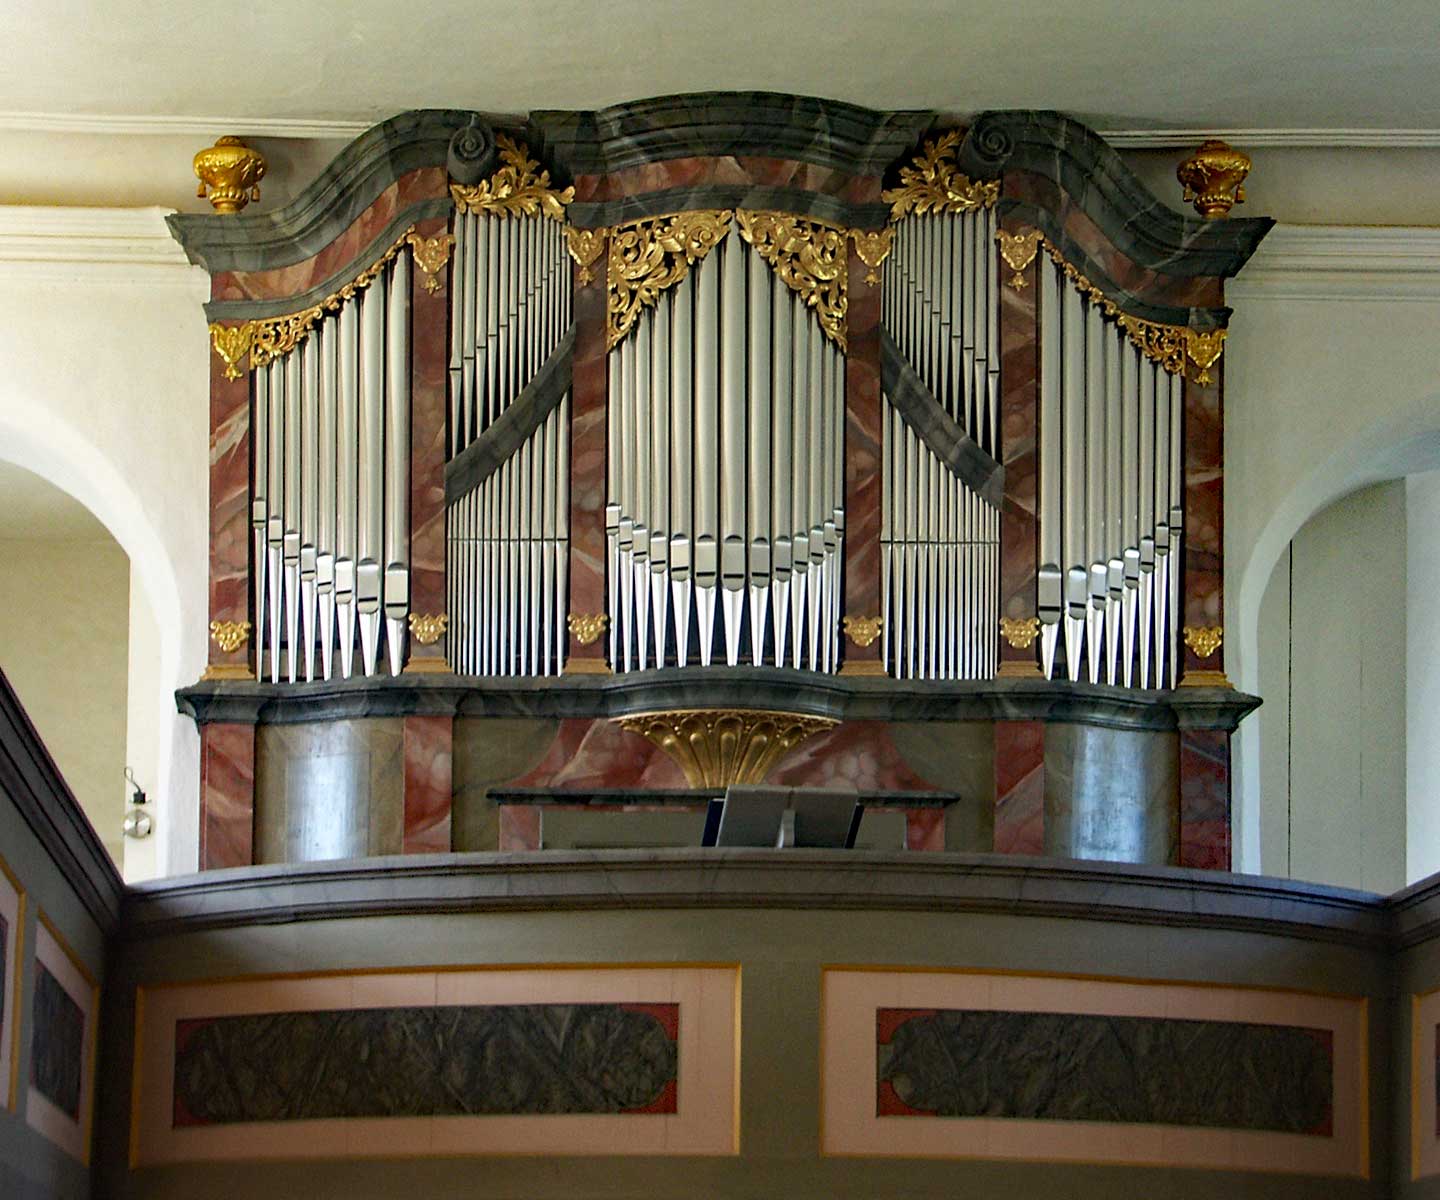 The organ in Störmthal, built in 1723 by Zacharias Hildebrandt, pupil of the famous organ builder Gottfried Silbermann.